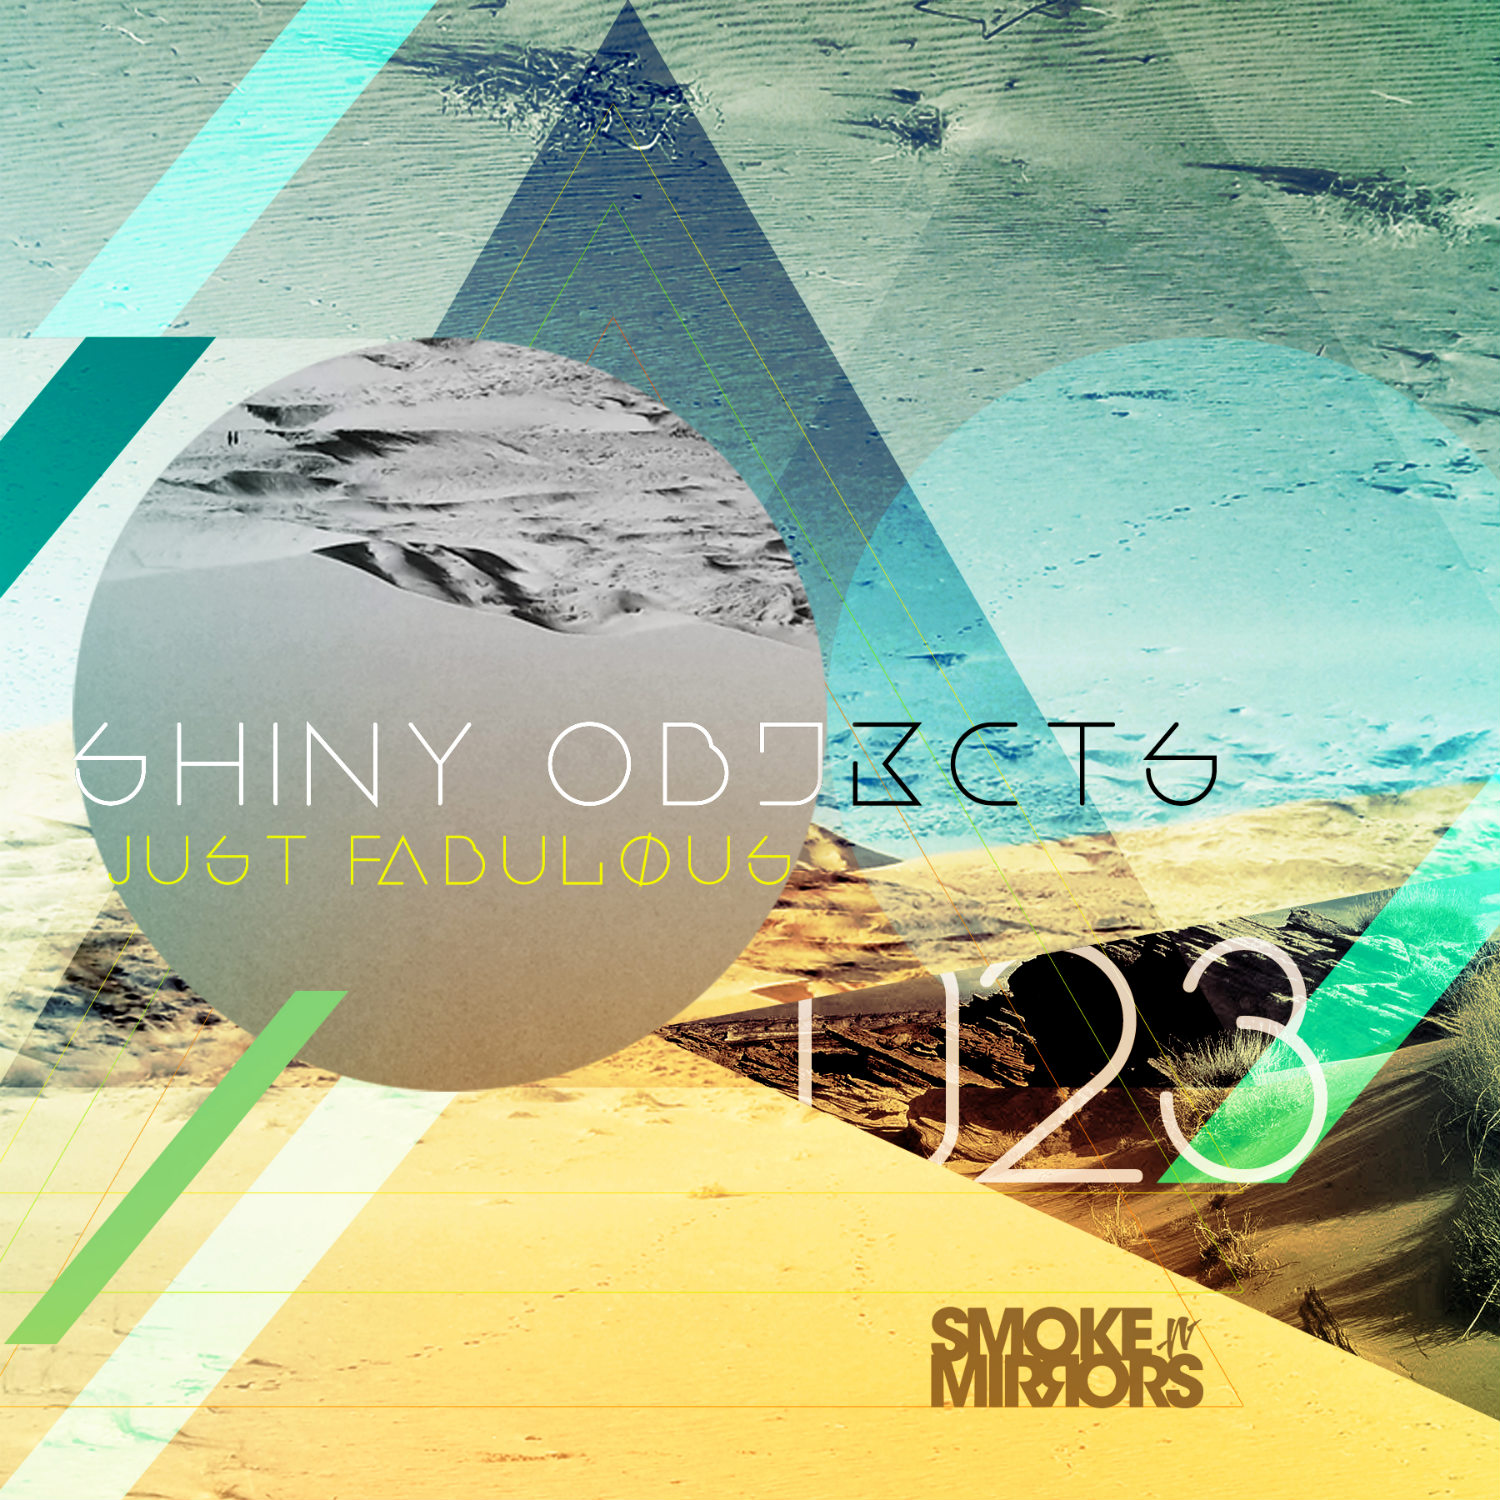 Shiny Objects - Just Fabulous